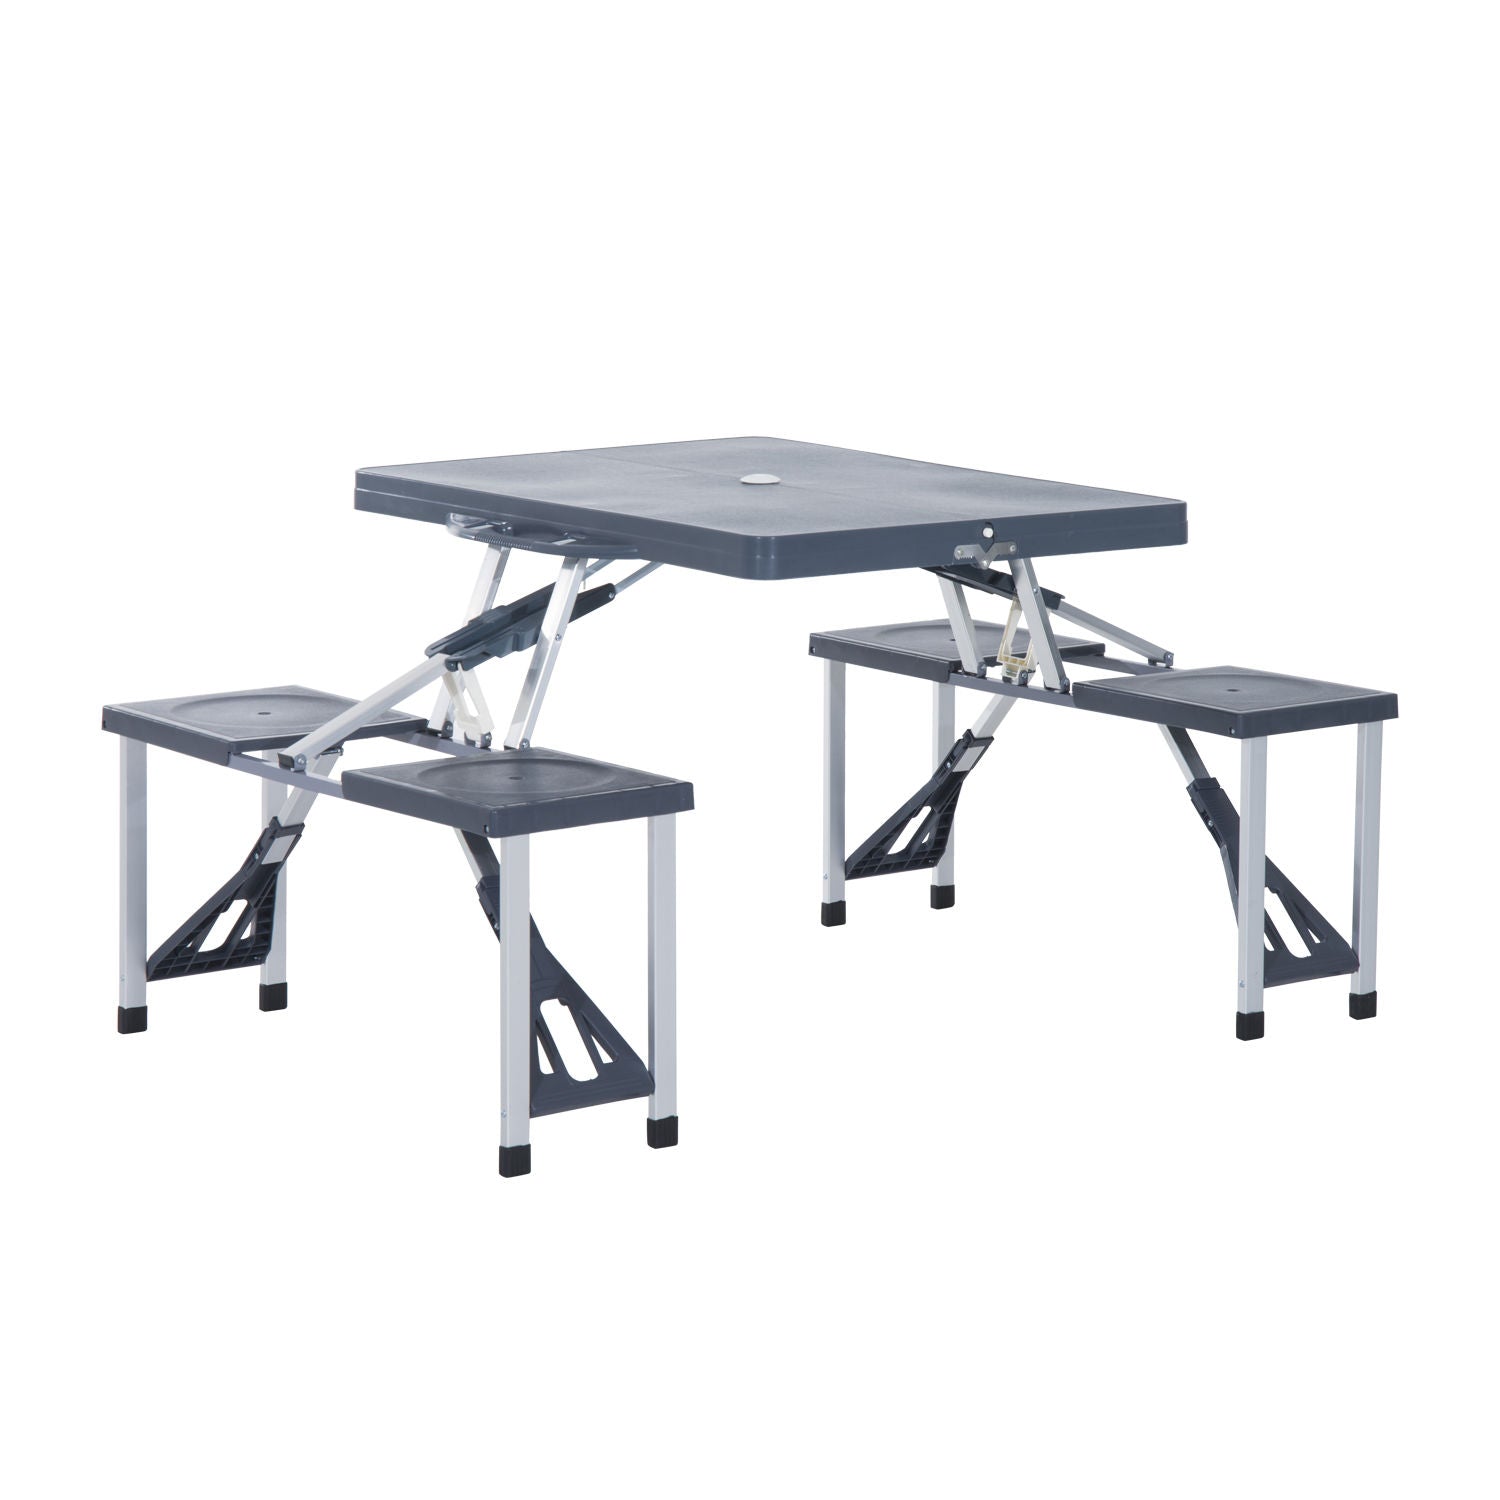 Nancy's Hemet Picnic table - Folding table - Camping table - Table - 4 Chairs - Seating group - Camping suitcase - Aluminum - Gray 